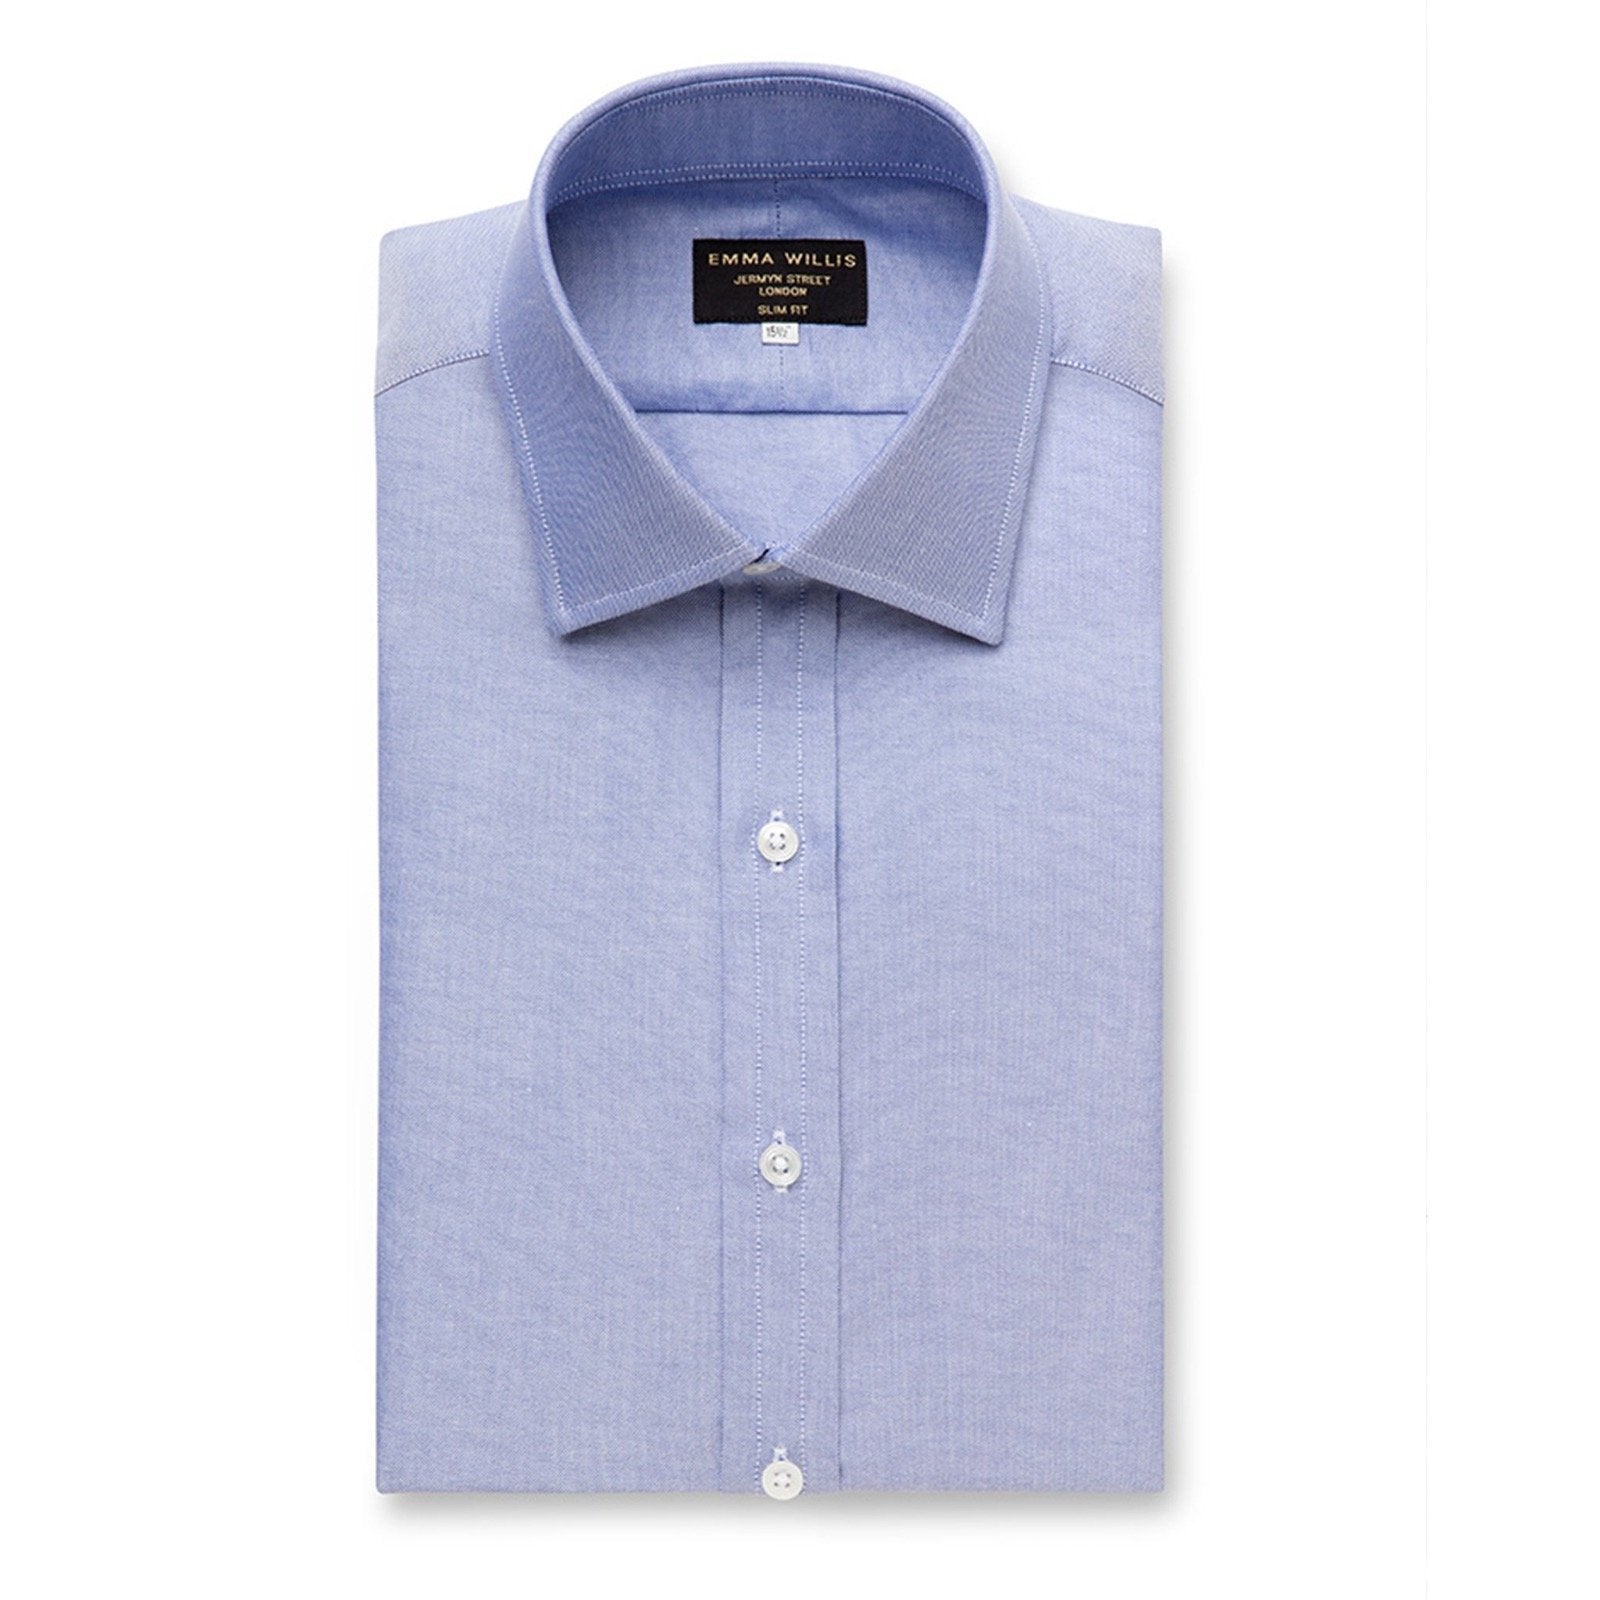 Blue Oxford Cotton Shirt freeshipping - Emma Willis